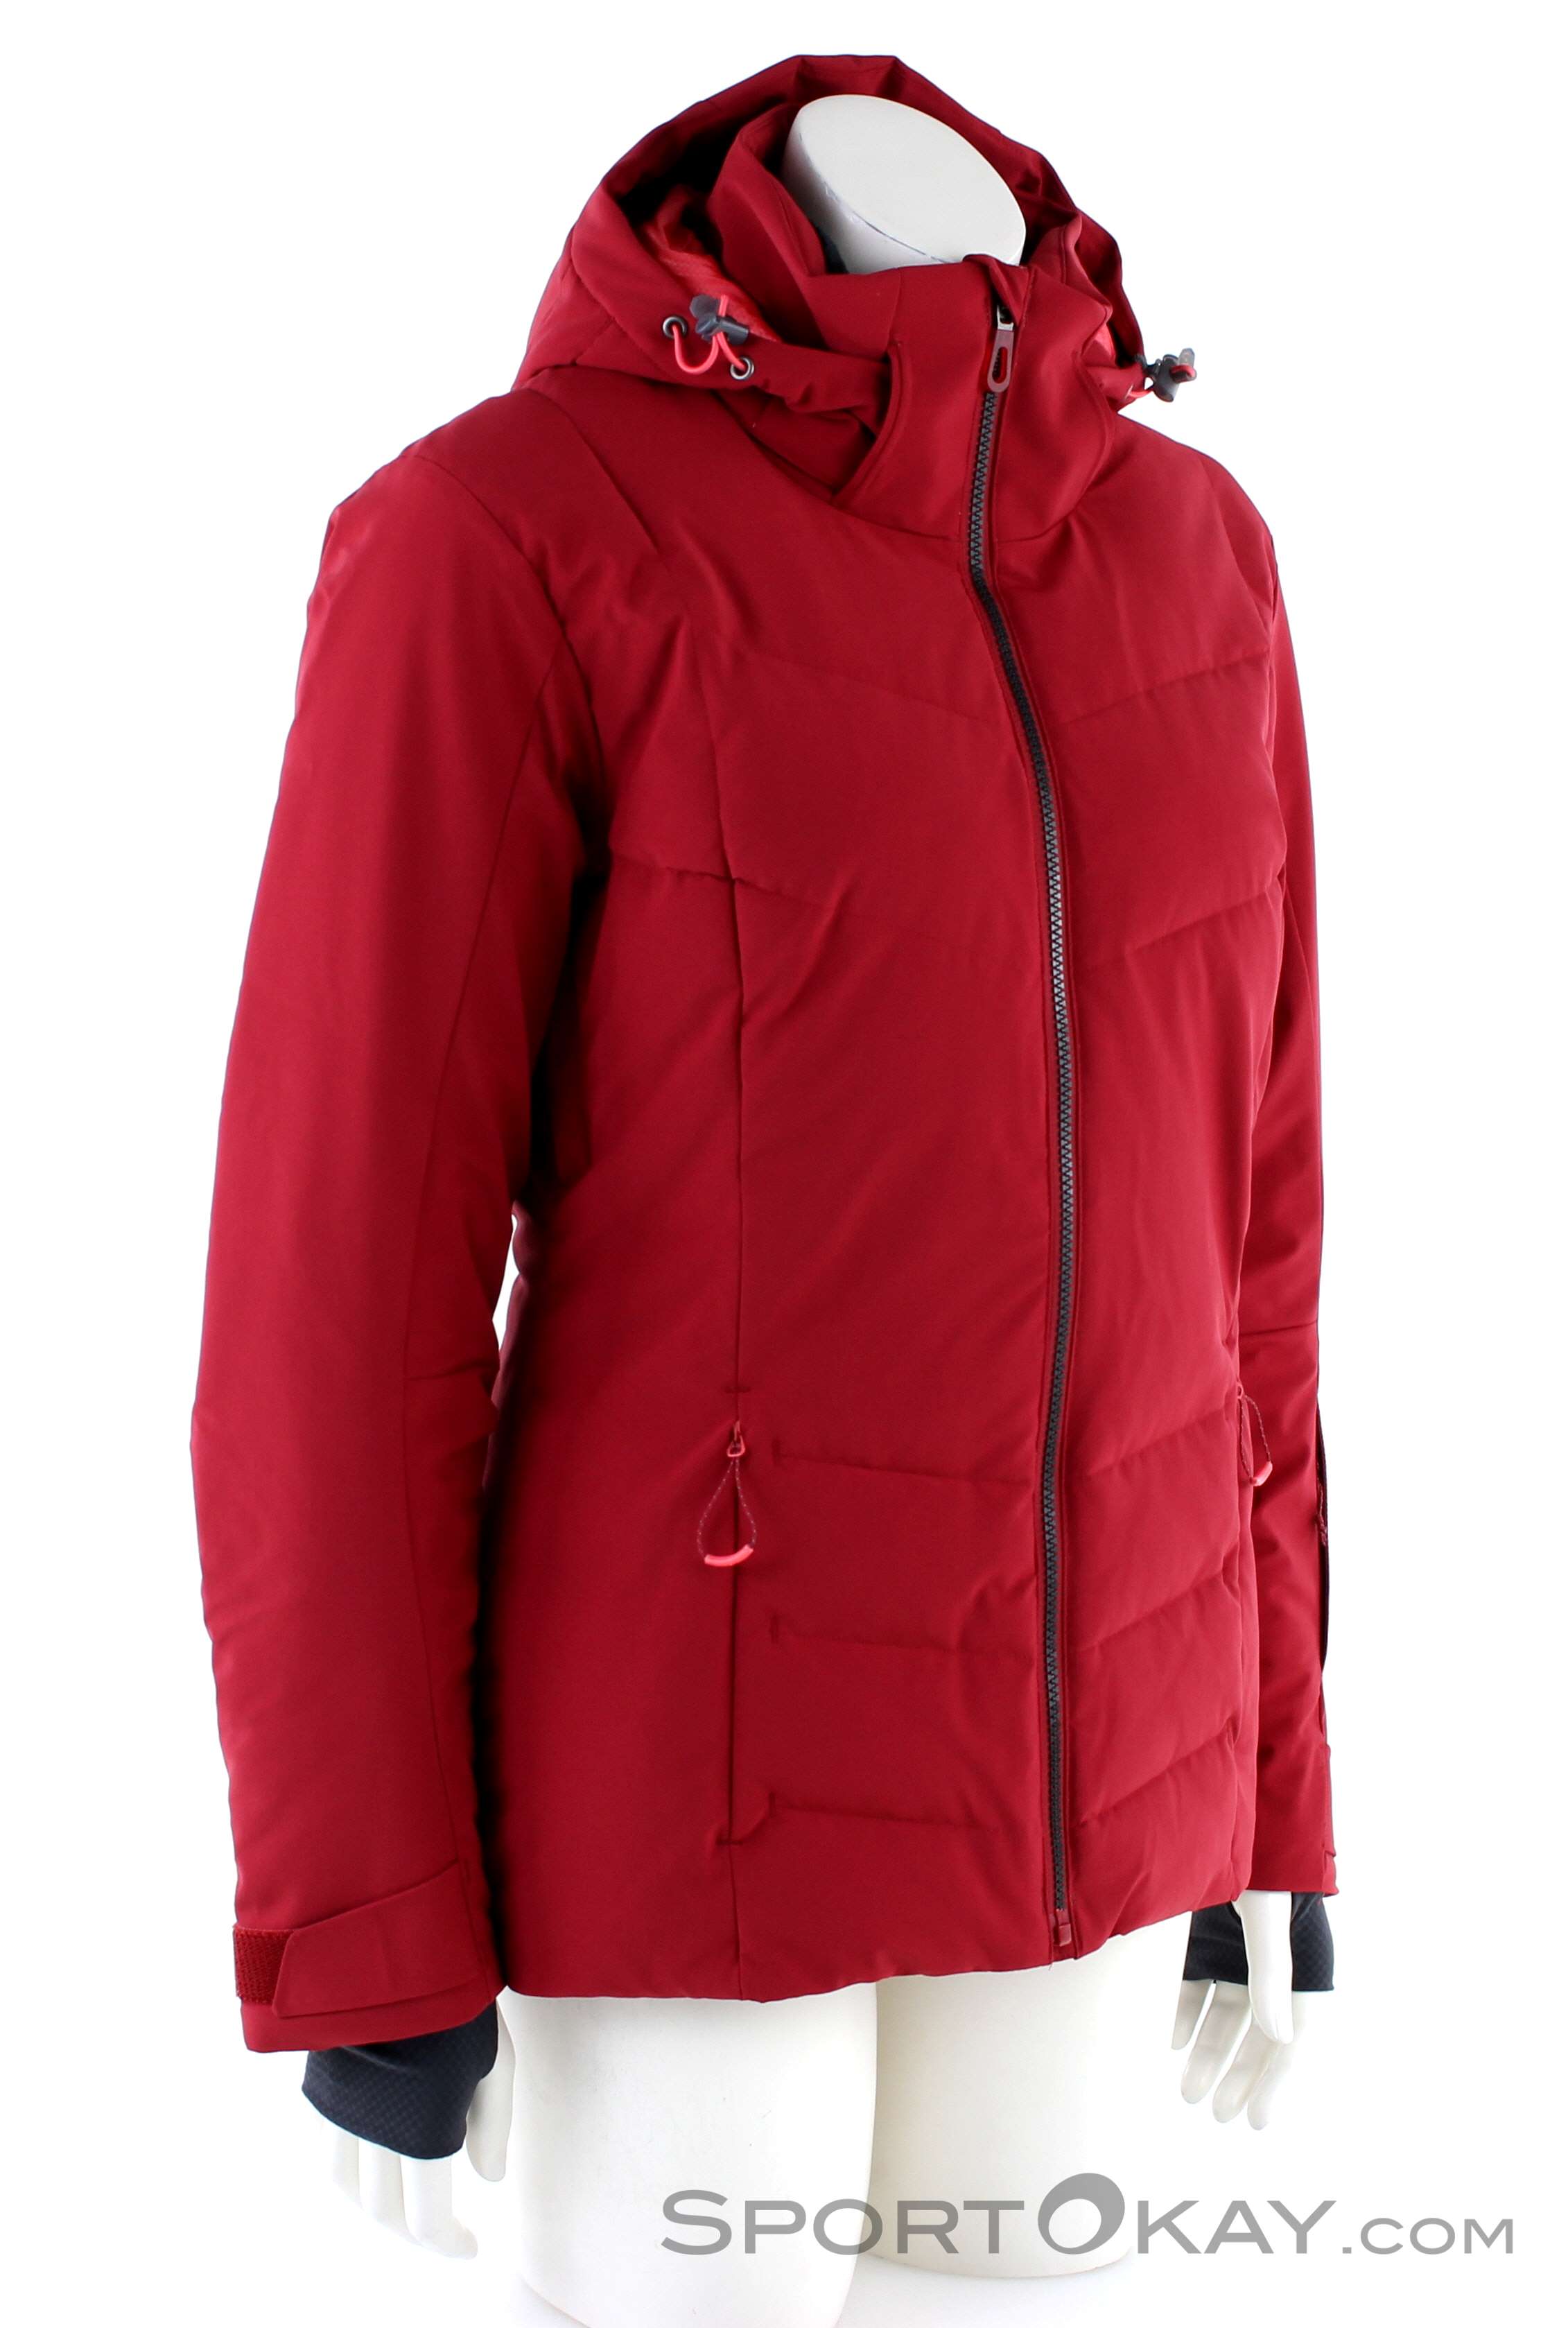 Salomon Icepuff Jacket Jacket - Ski Jackets - Ski Clothing - & Freeride - All